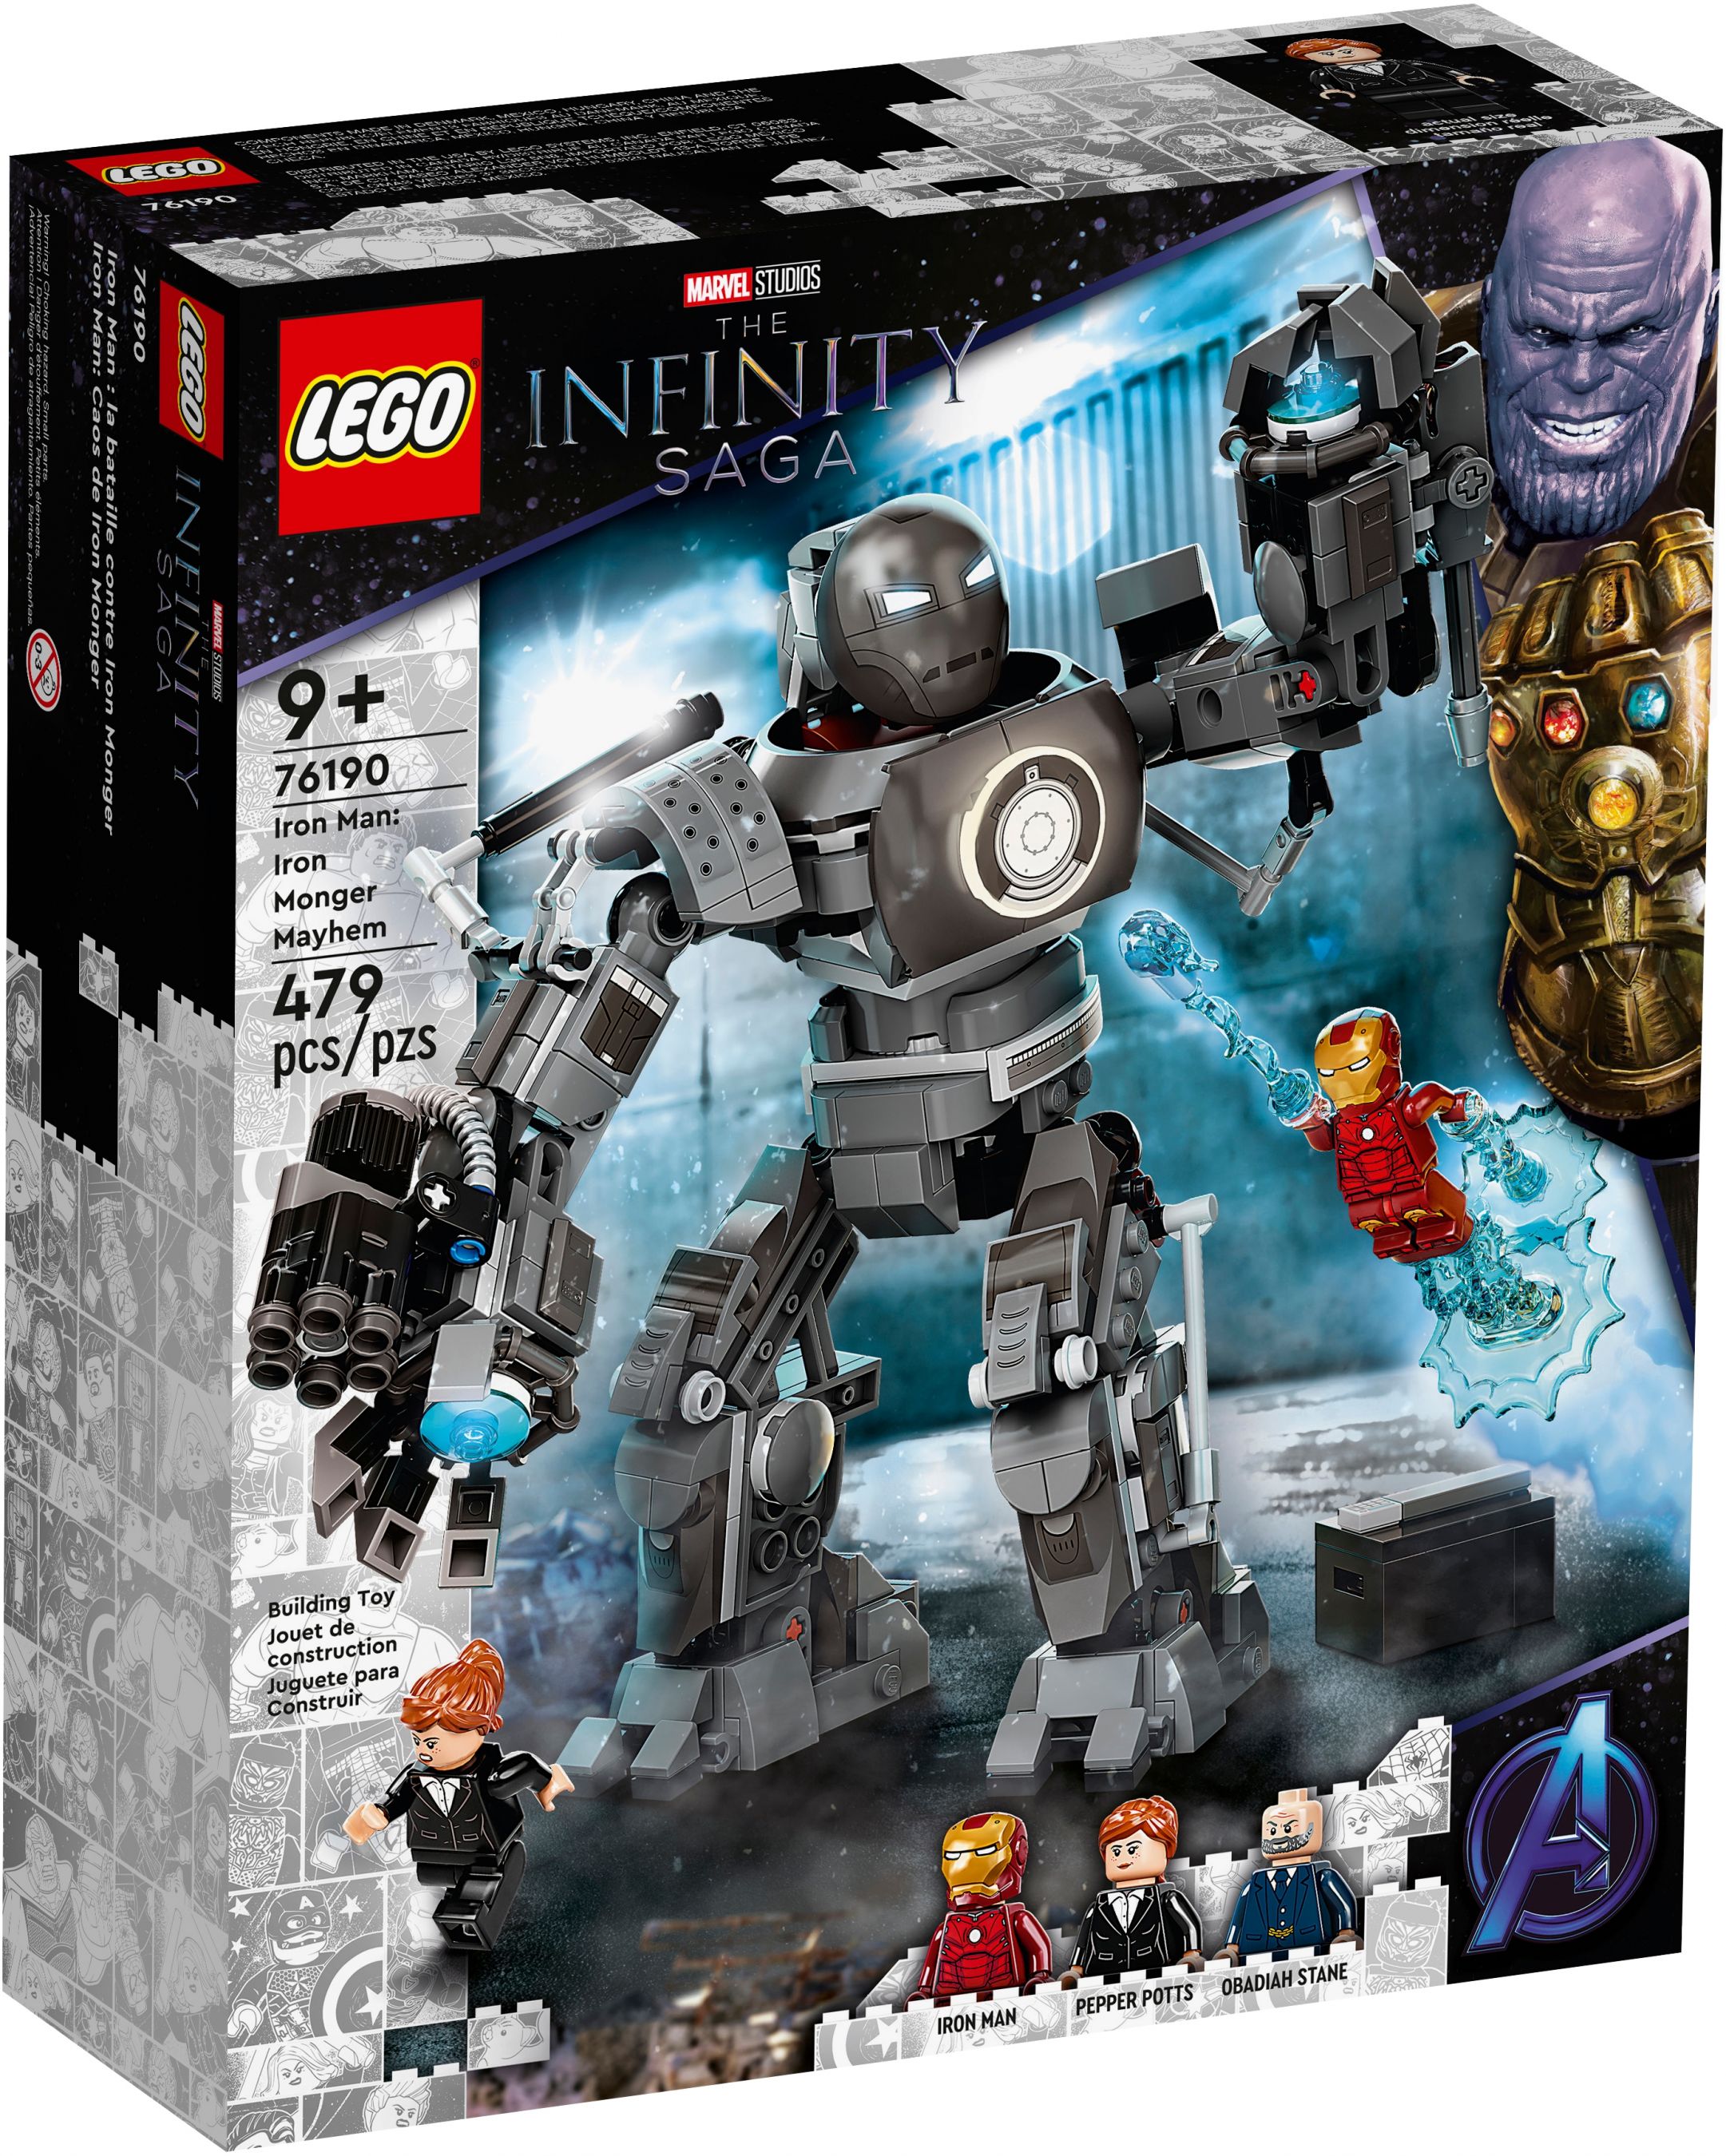 LEGO Super Heroes 76190 Iron Man und das Chaos durch Iron Monger LEGO_76190_box1_v39.jpg